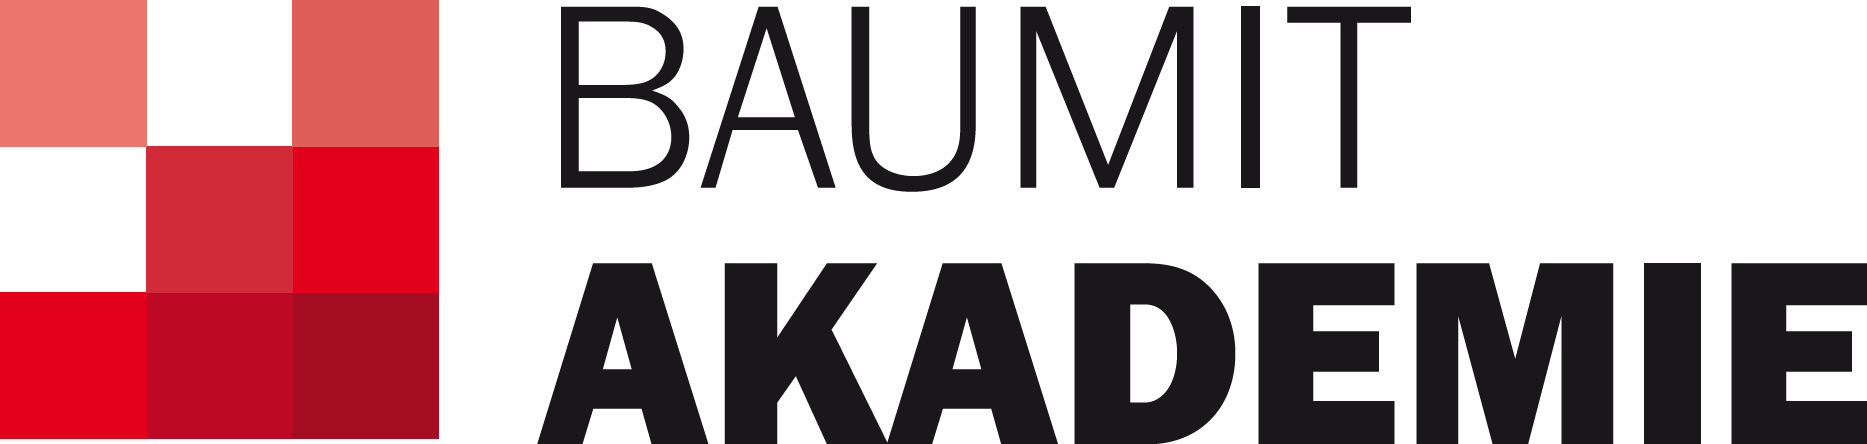 Baumit Akademie 2019